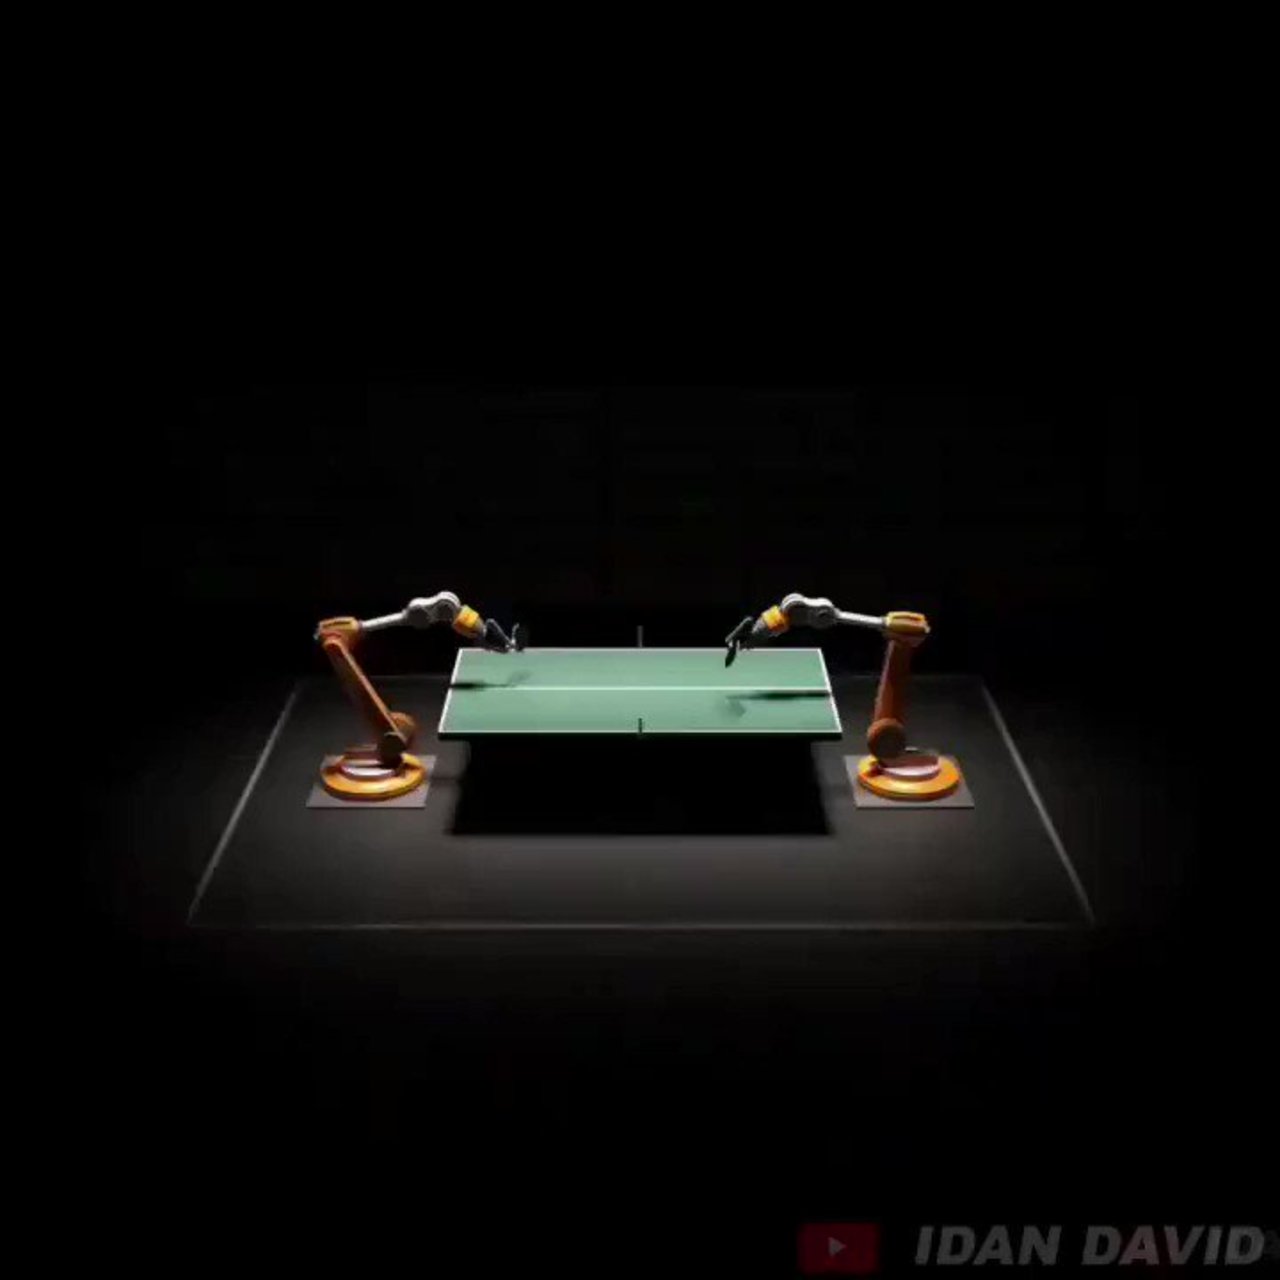 #Robot playing Table Tennis via @jblefevre60 #AI #ArtificialIntelligence #MI #Robotics #Sports #Innovation #RPA #Automation cc: @ronald_vanloon @pbalakrishnarao @chr1sa https://t.co/Vrc8cL3WXF